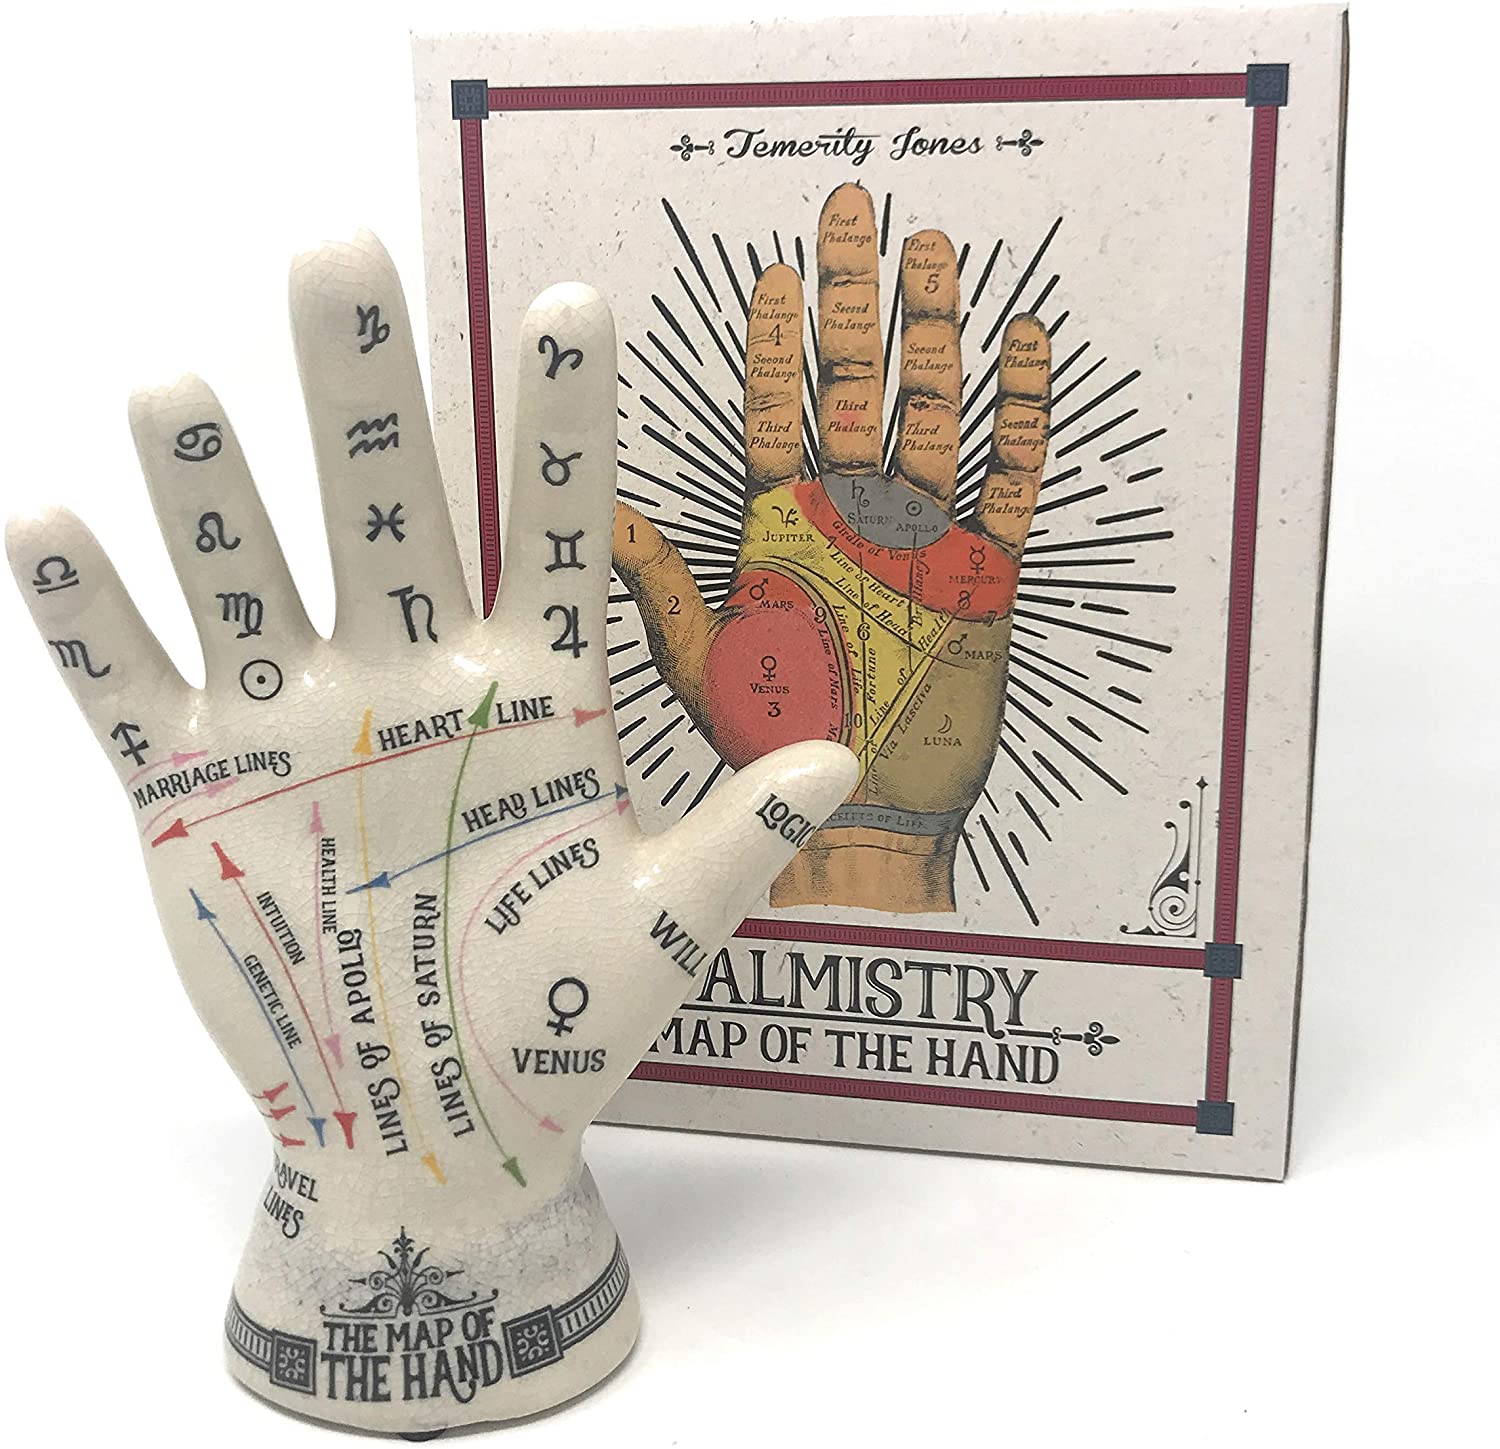 Temerity Jones Porcelain Crackle Phrenology Palmistry Hand Map of the Hand